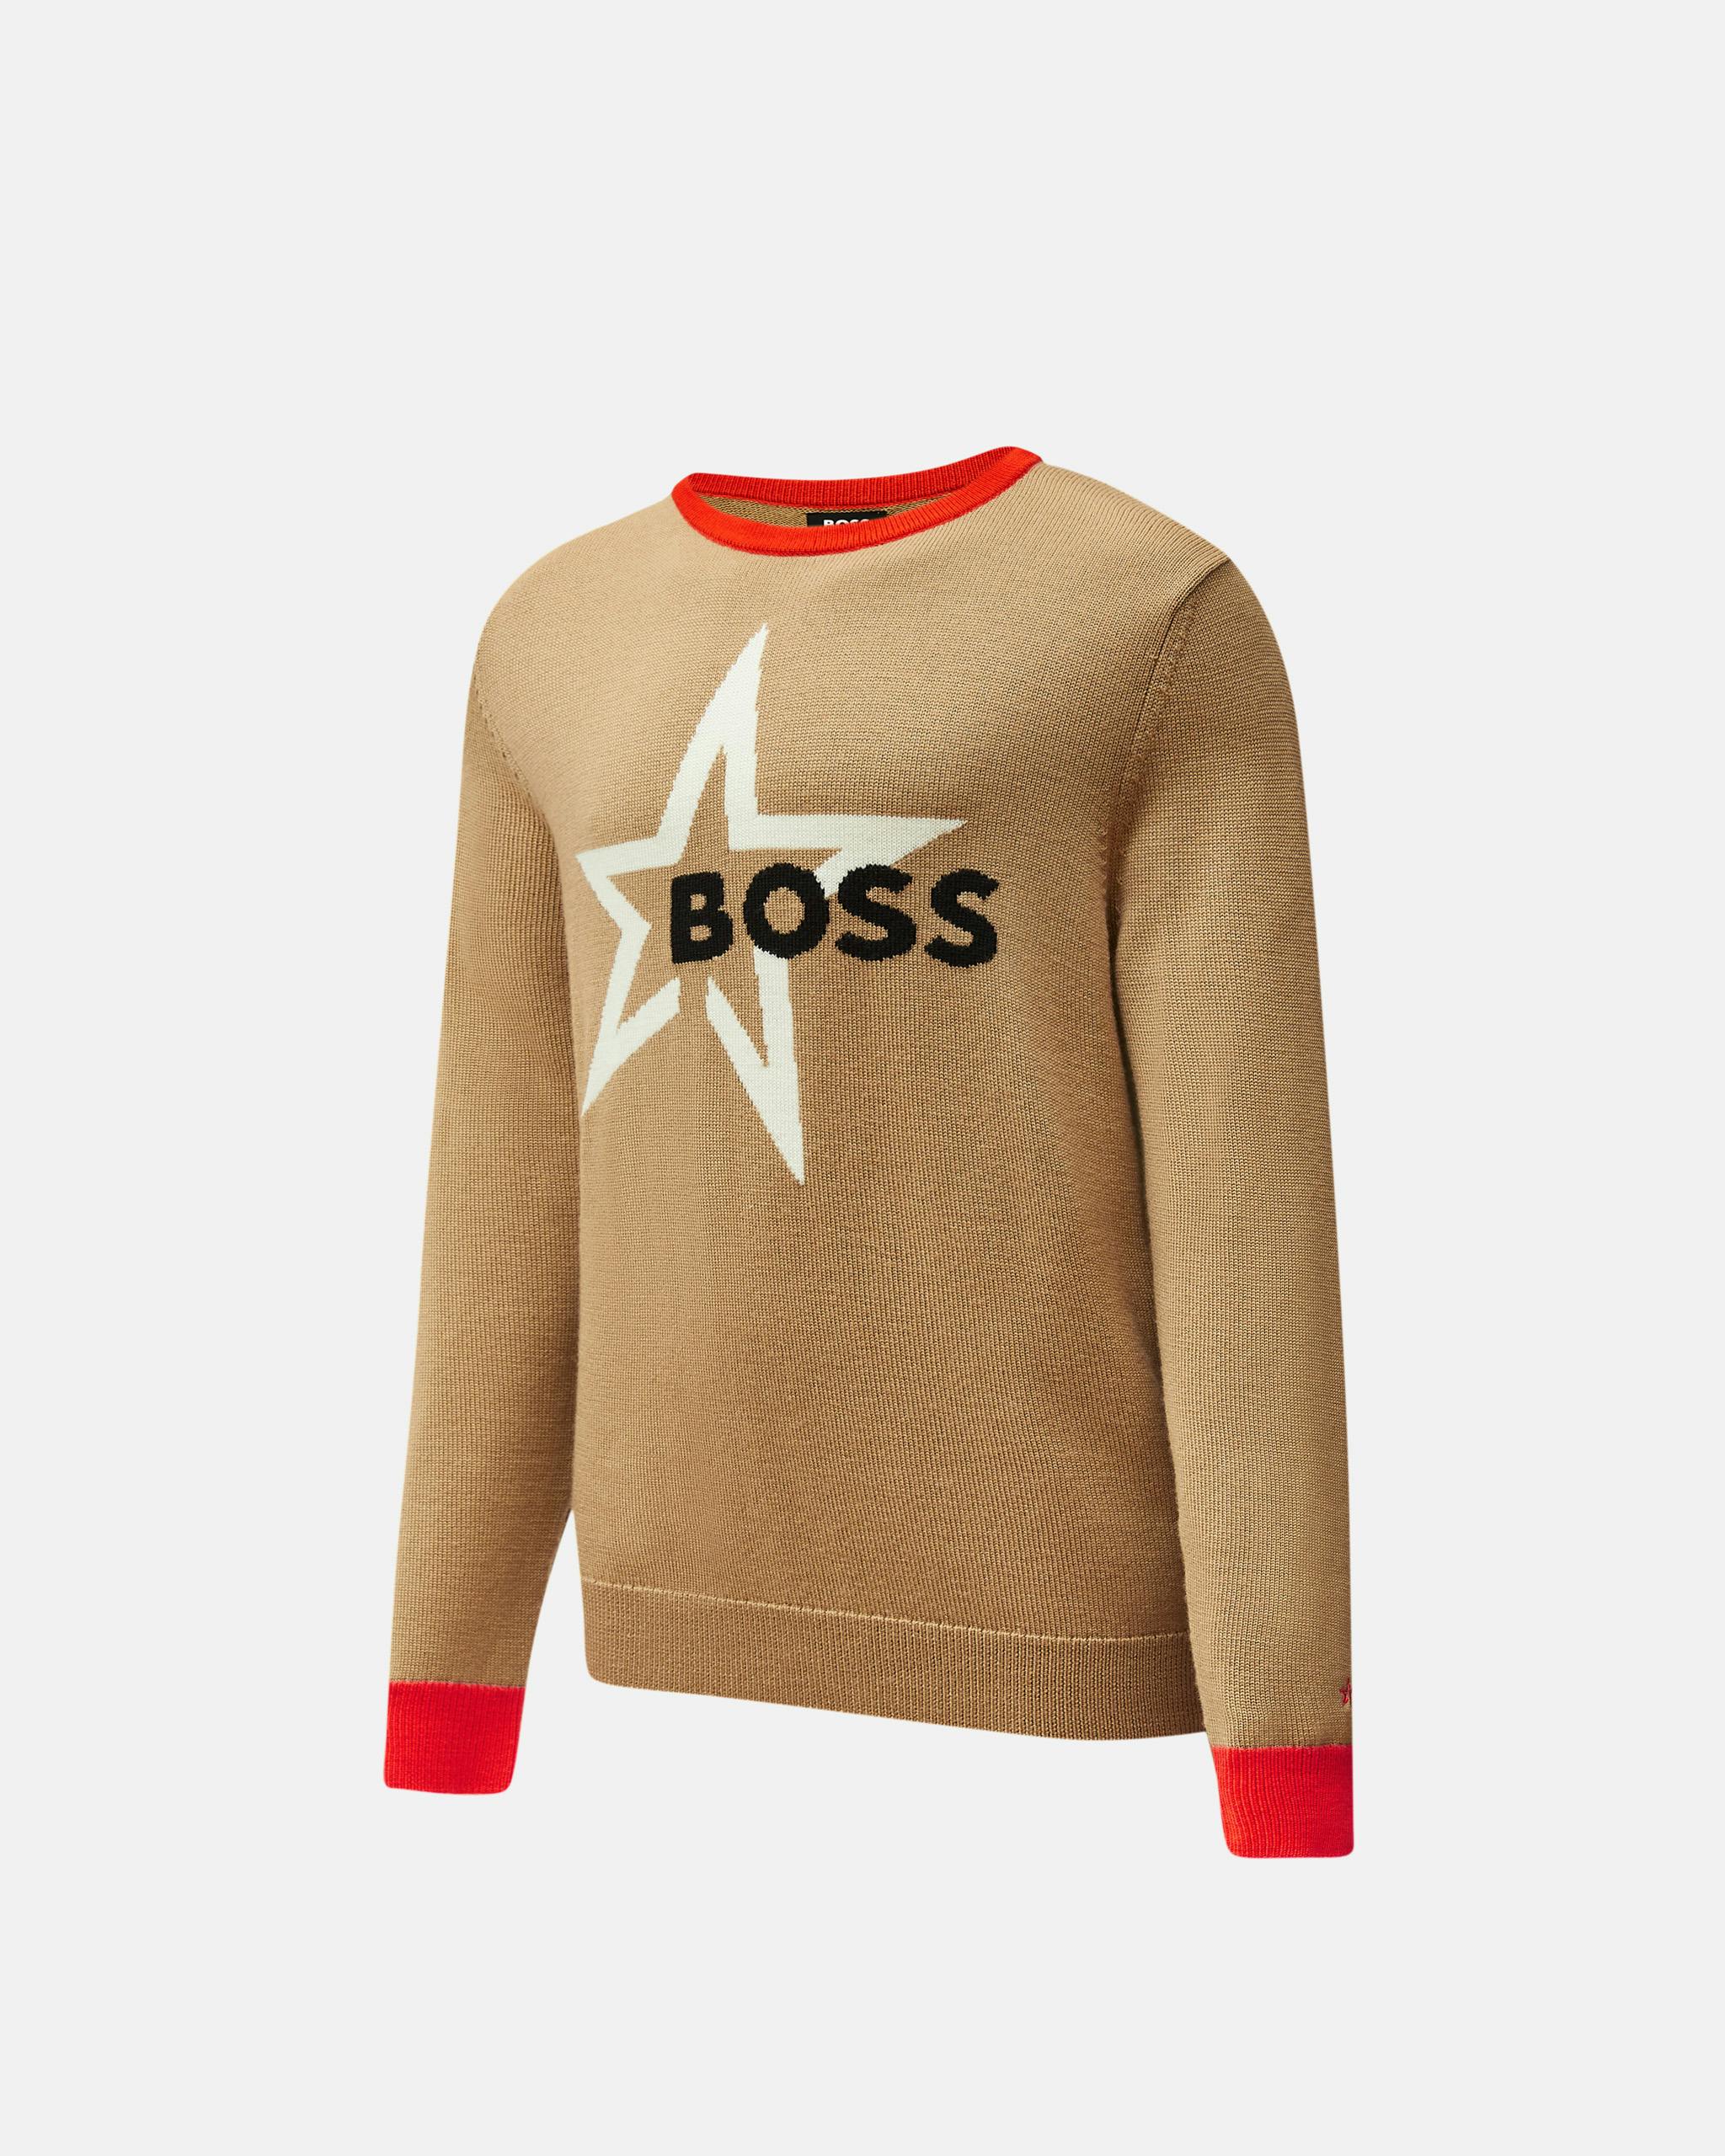 PM x Boss Piste Merino Wool Sweater 0